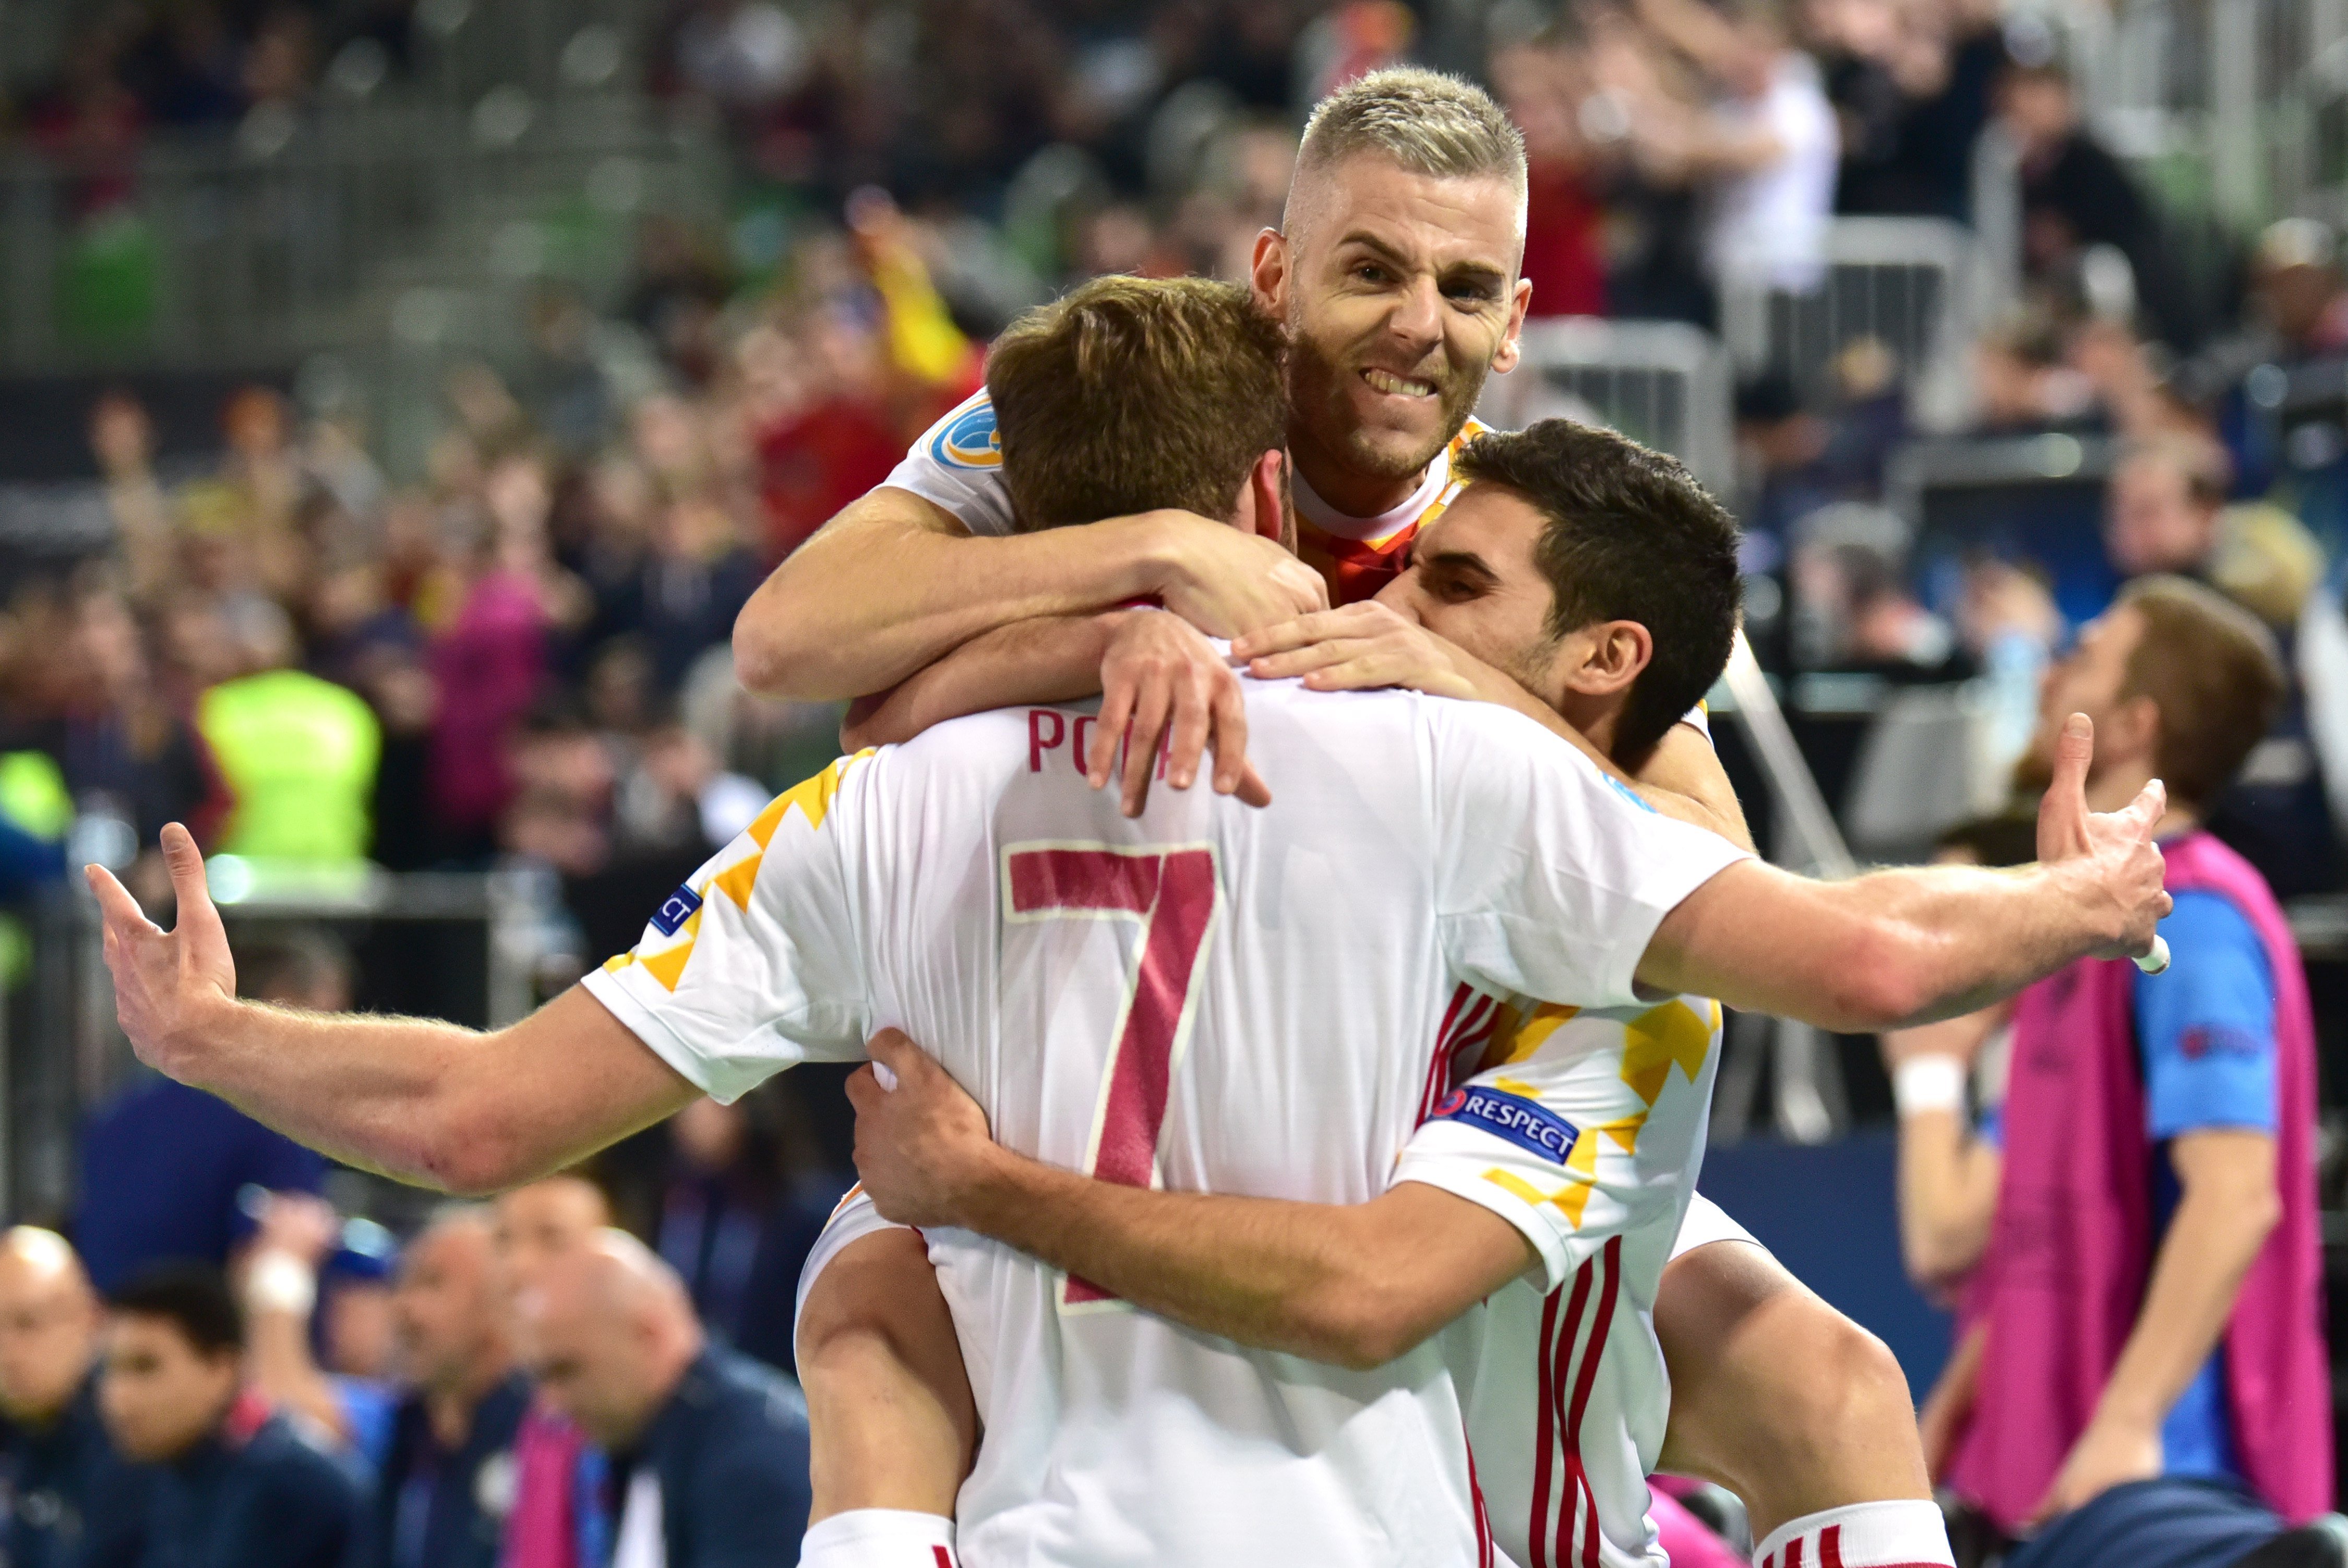 Espanha junta-se a Portugal na final do Europeu de futsal